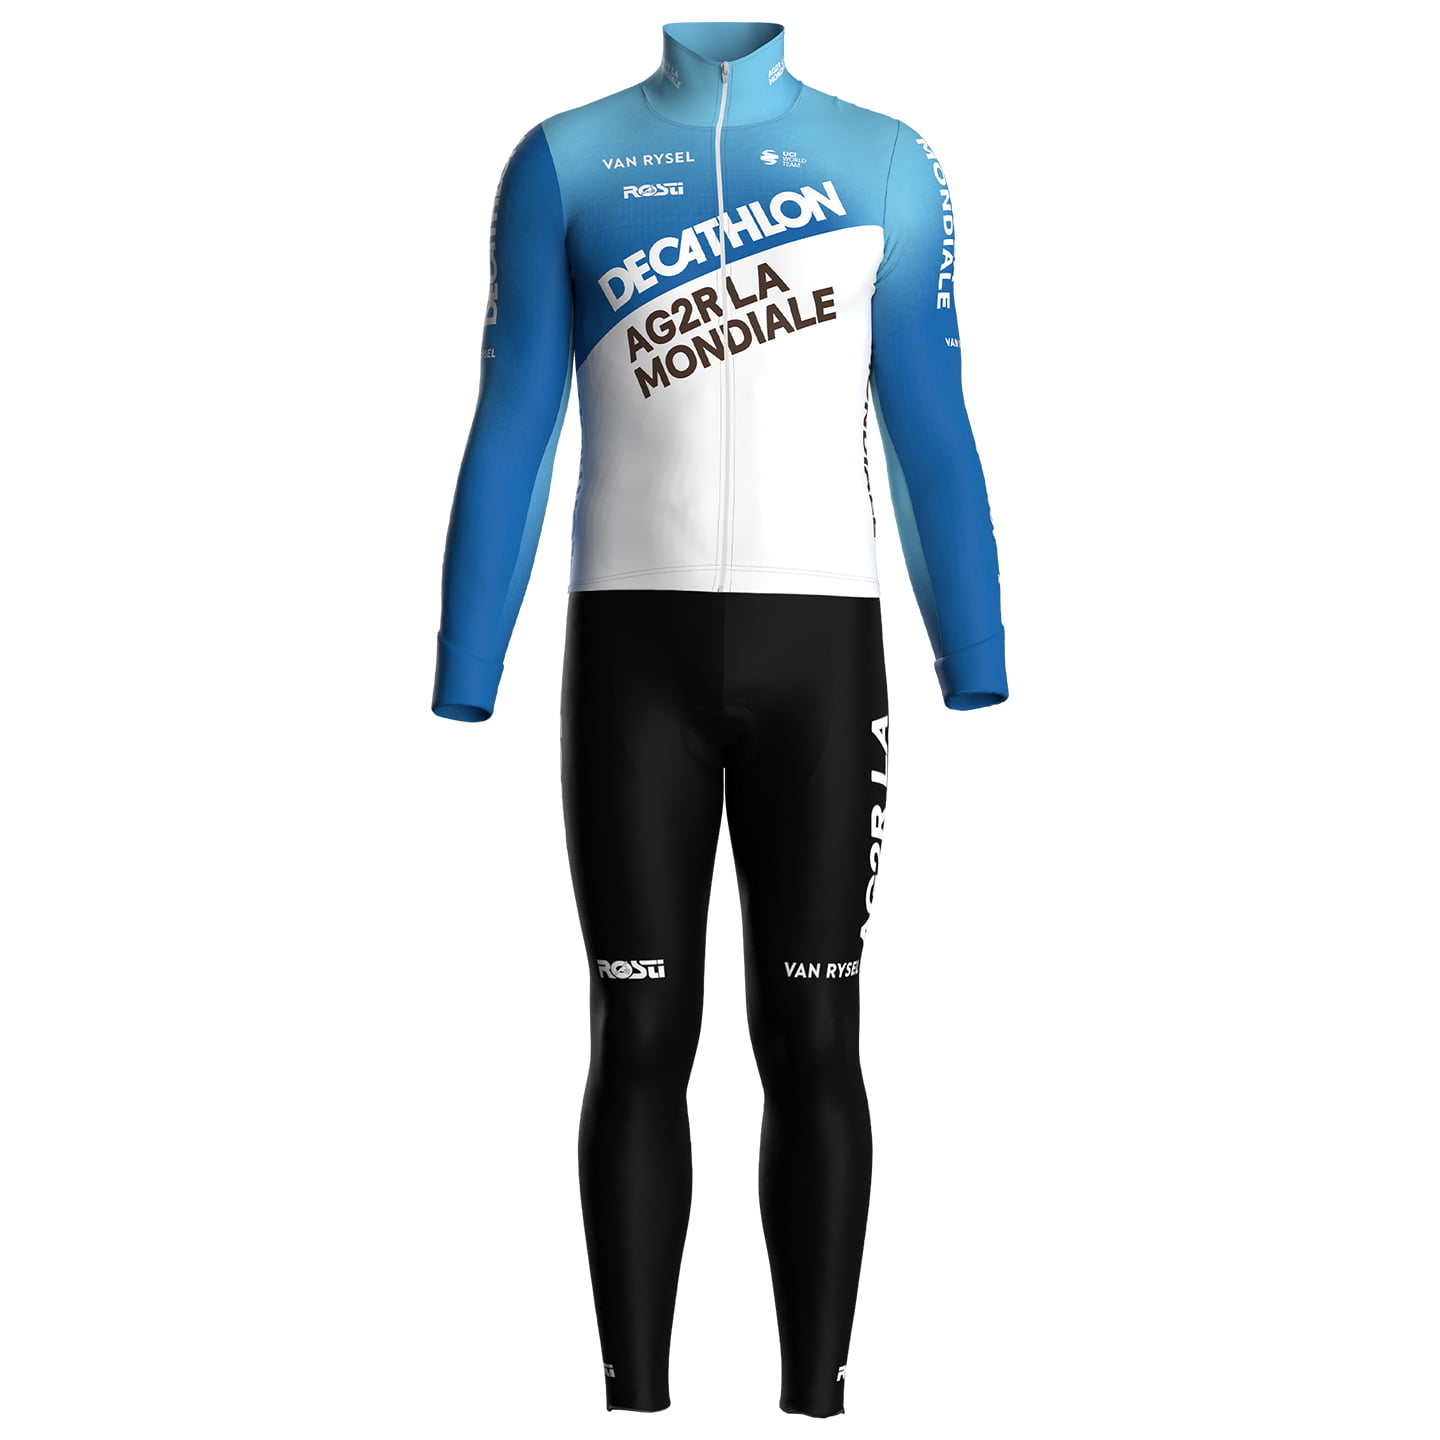 DECATHLON AG2R LA MONDIALE 2024 Set (winter jacket + cycling tights) Set (2 pieces), for men